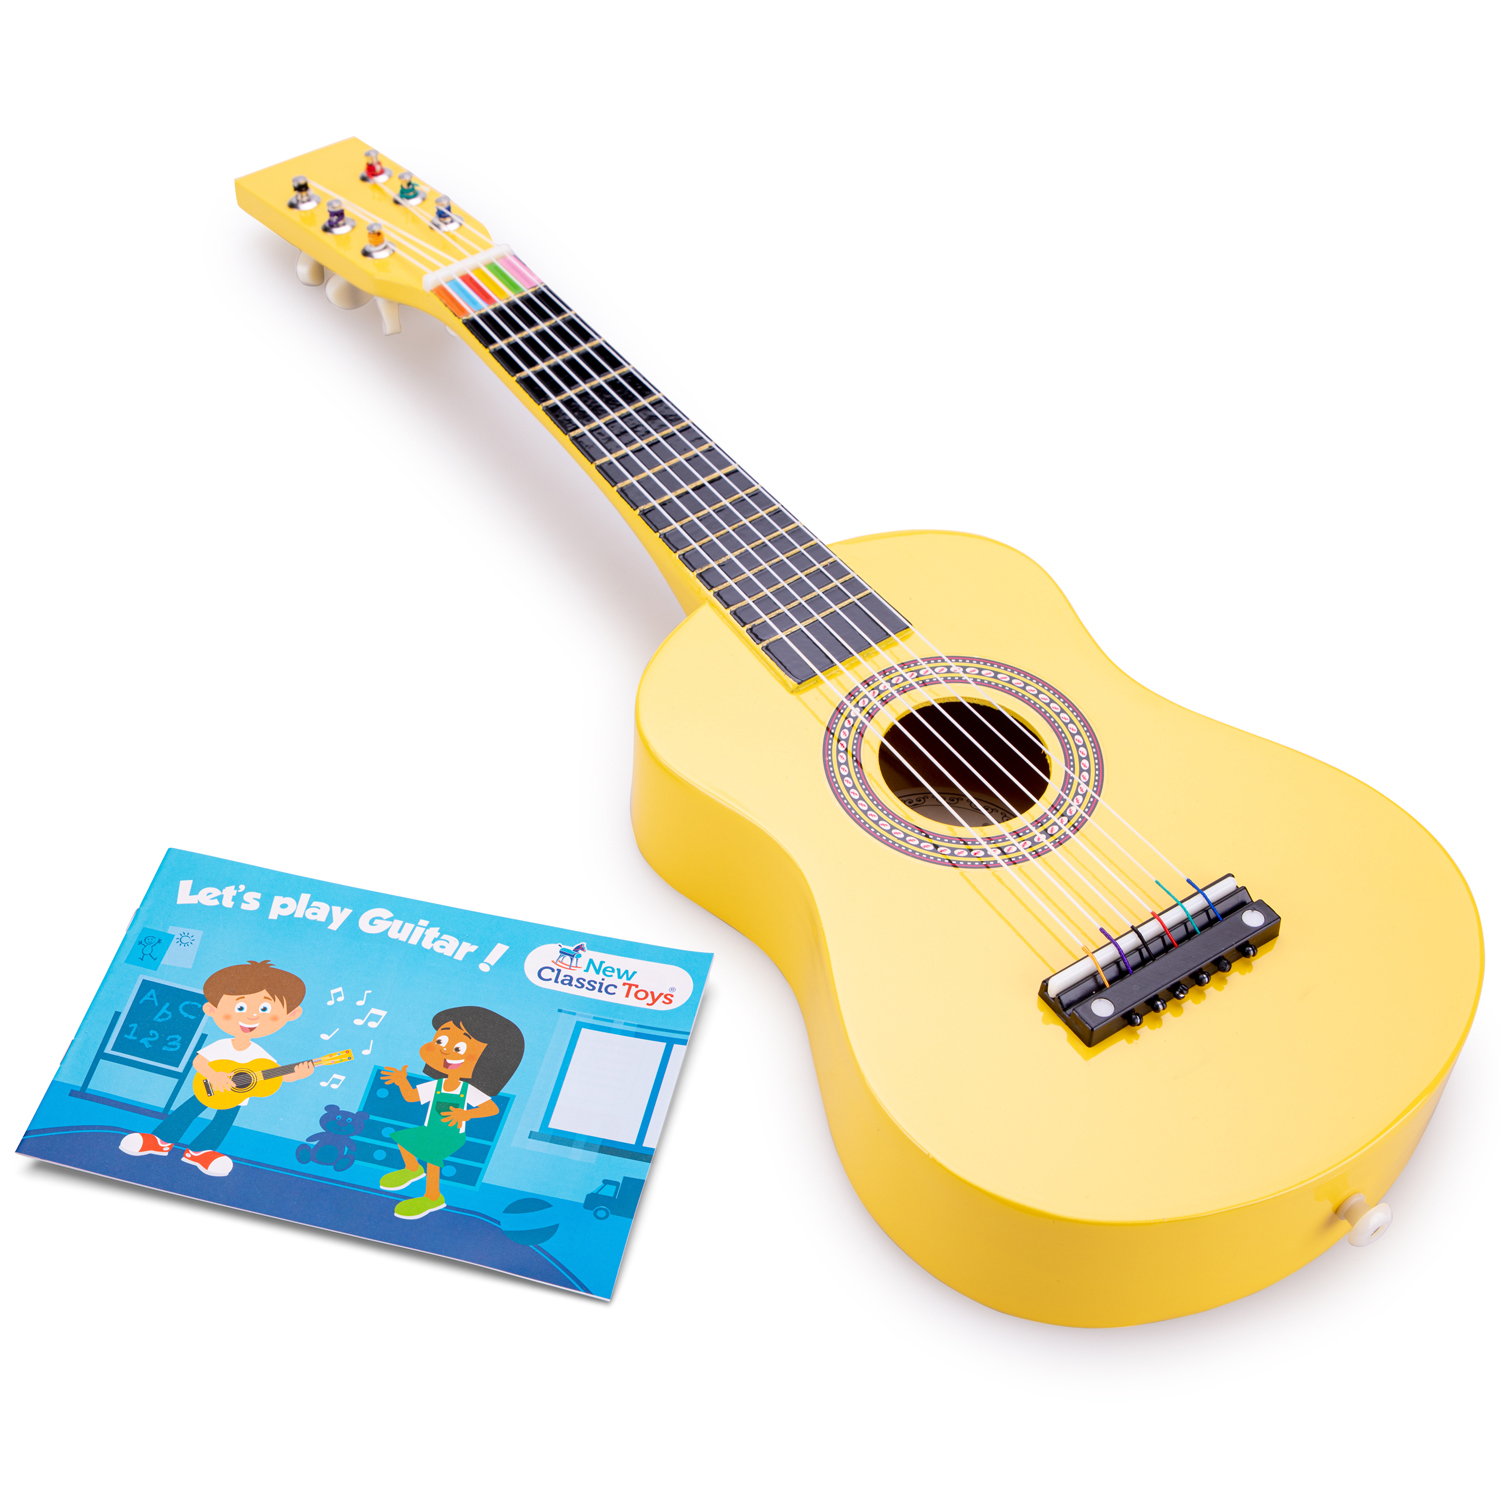 Gitarre gelb Kindergitarre aus Holz Kinder-Instrument Musikspielzeug